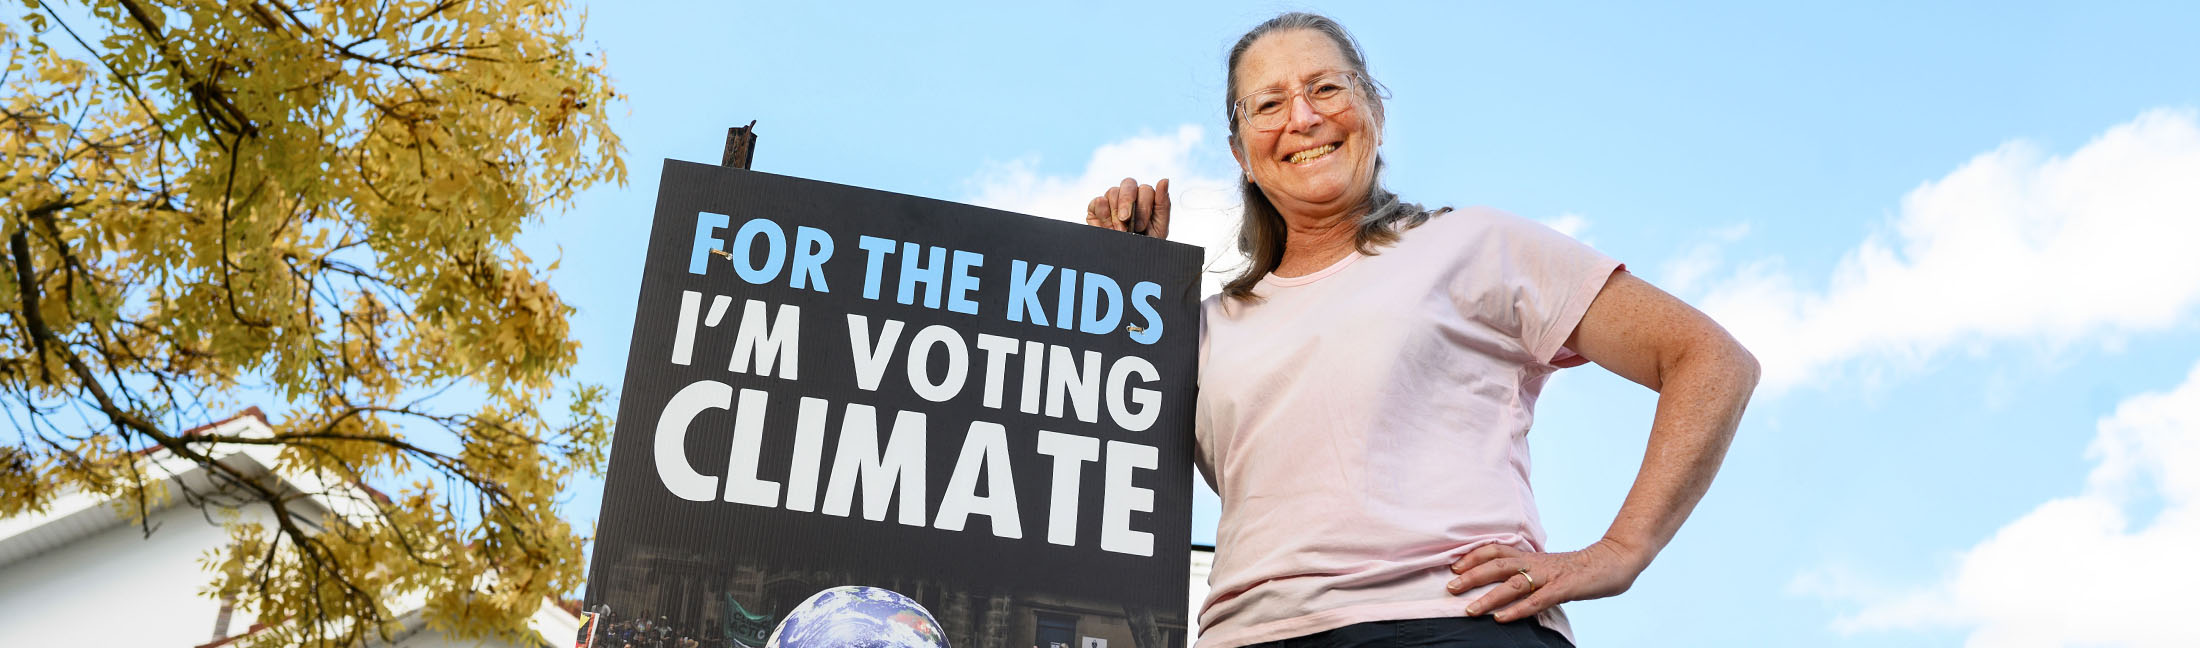 Vote Climate Neighbours Glen Iris Alison Wright